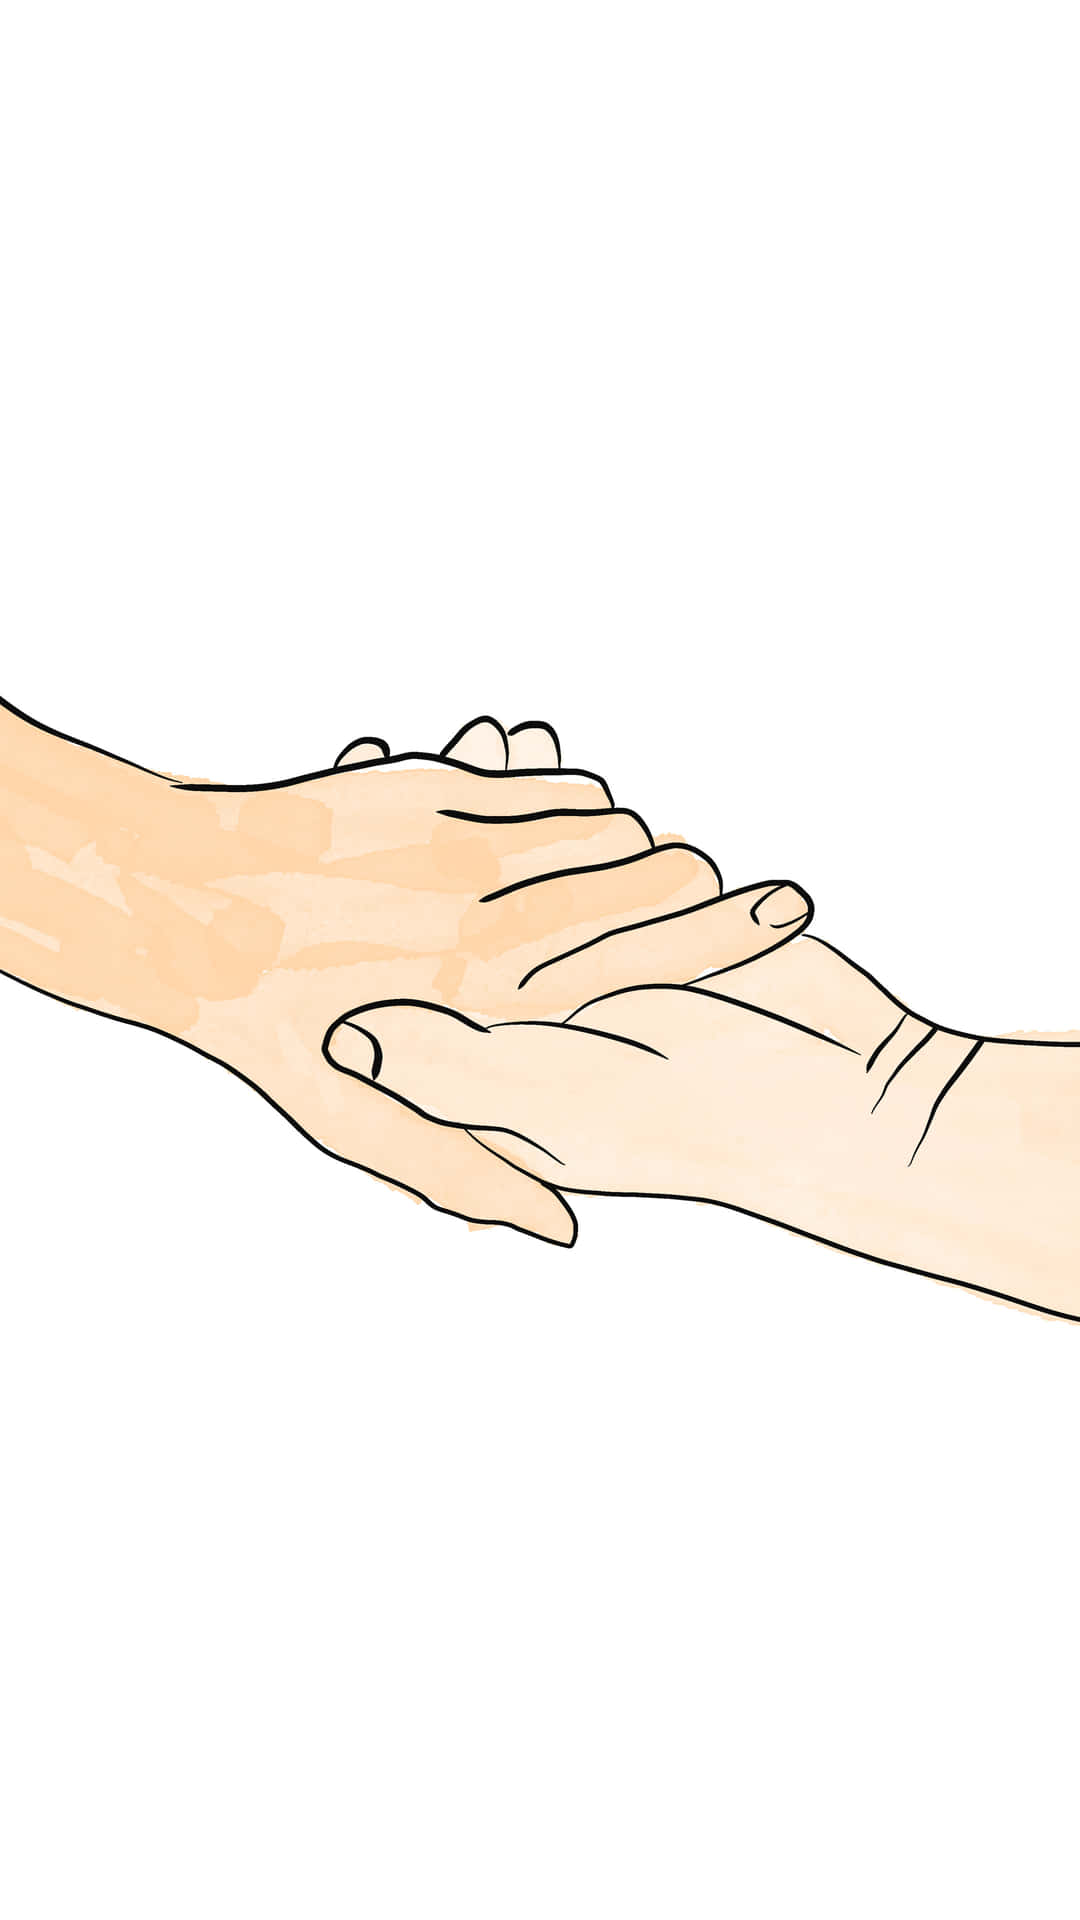 Handshake Drawing Background